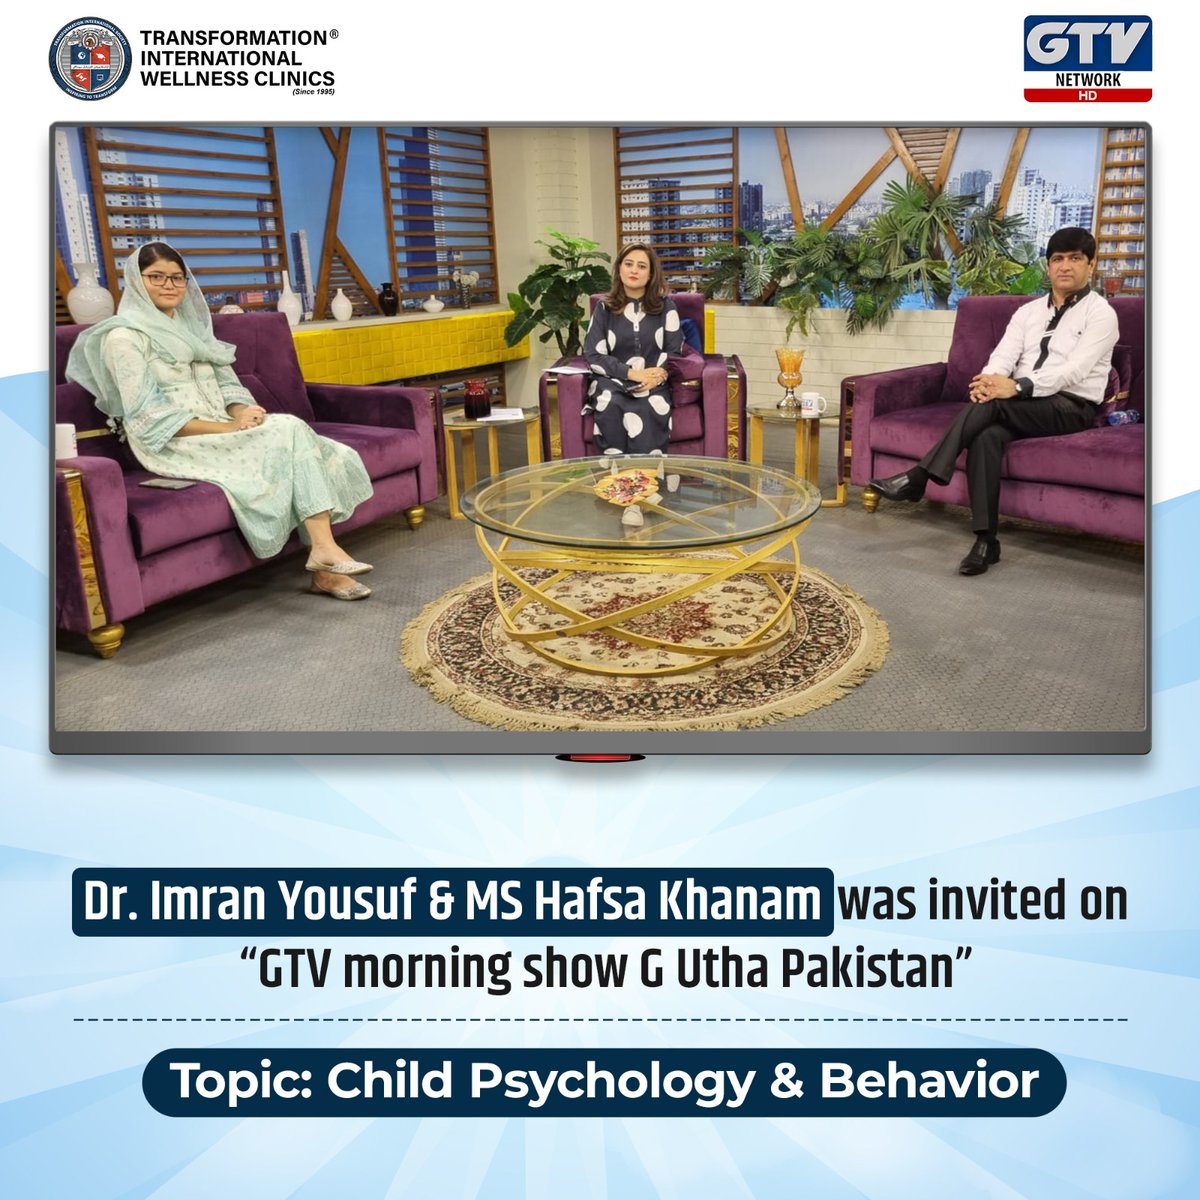 Dr. Imran Yousuf & Ms. Hafsa Khanam was invited on 'GTV morning show 𝐆 𝐔𝐭𝐡𝐚 𝐏𝐚𝐤𝐢𝐬𝐭𝐚𝐧'

Topic: 𝗖𝗵𝗶𝗹𝗱 𝗣𝘀𝘆𝗰𝗵𝗼𝗹𝗼𝗴𝘆 & 𝗕𝗲𝗵𝗮𝘃𝗶𝗼𝗿

#DrImran #HafsaKhanam #GTV #GUthaPakistan #ChildPsychology #ChildBehavior #morningshow